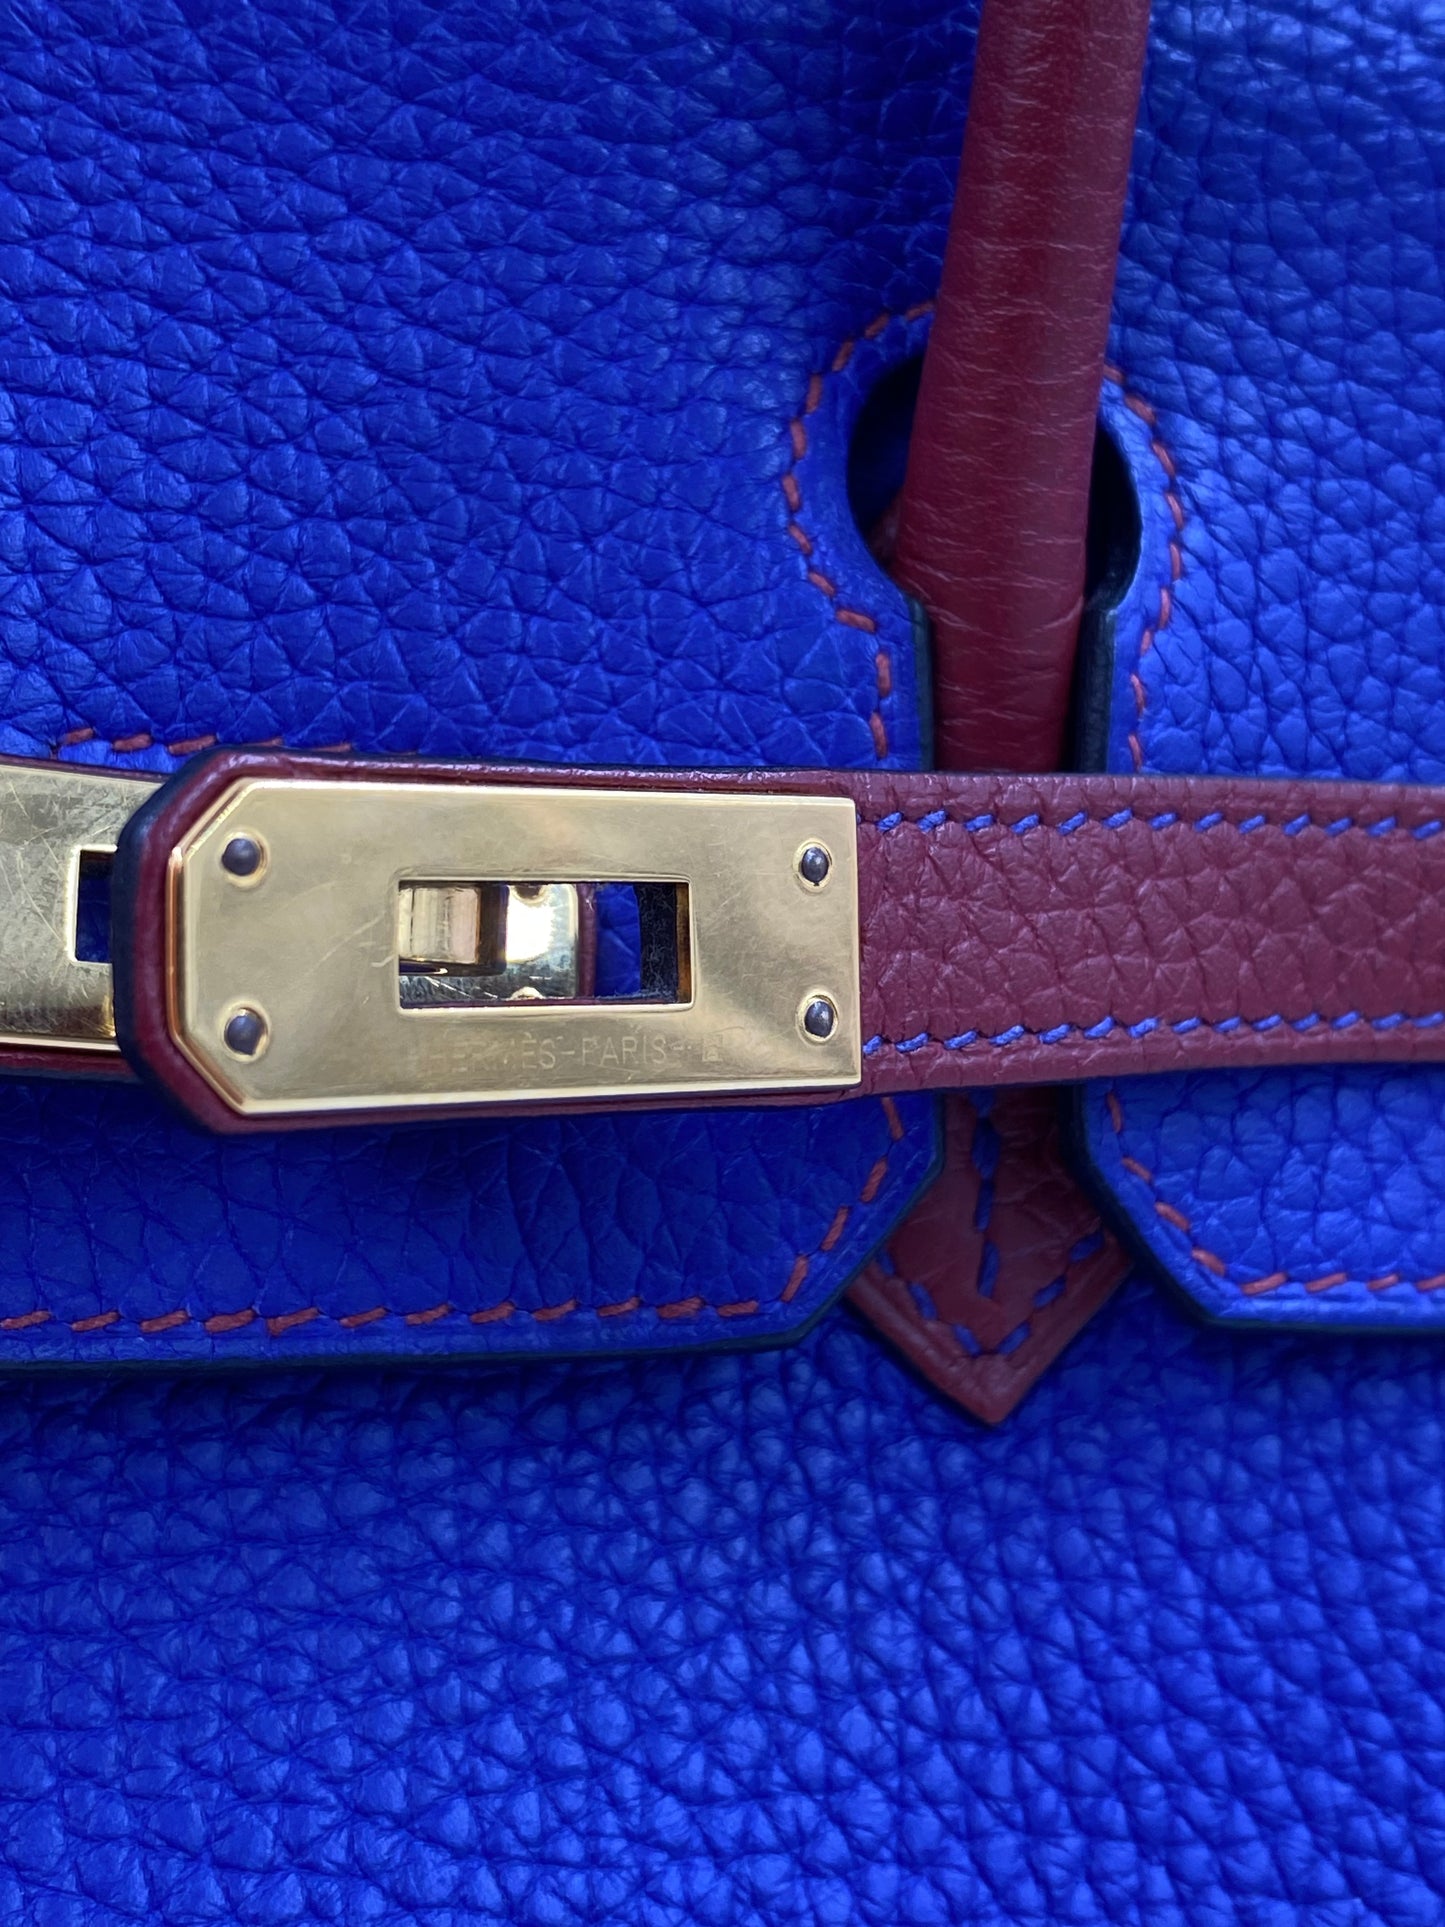 HERMÈS Birkin 25 Clemence Leder Electric Blue gold Hardware Fullset mit Original Rechnung